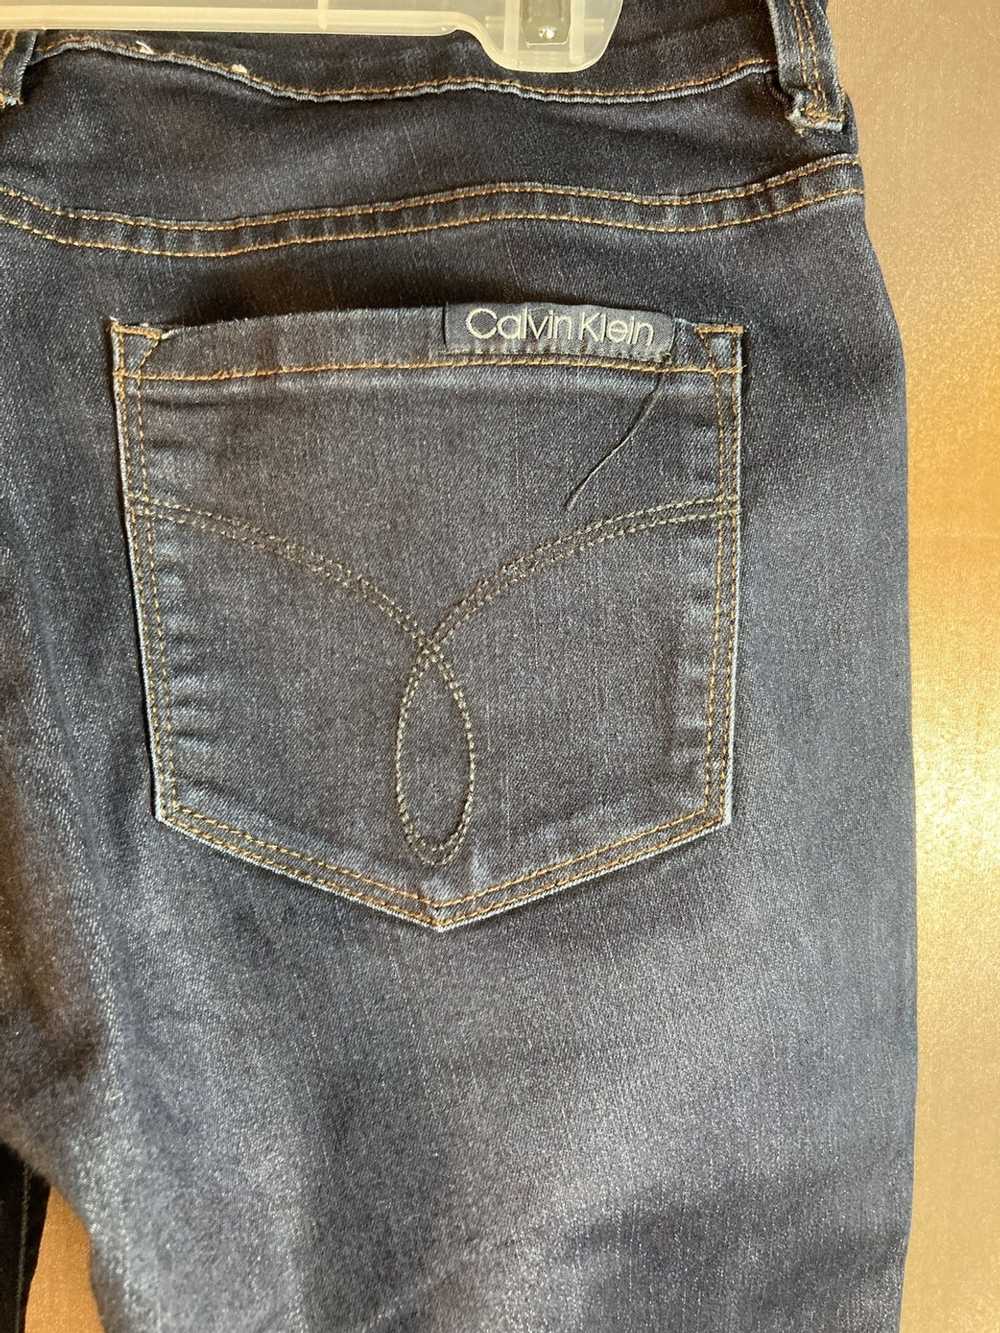 Calvin Klein Calvin Klein stretchy jeans size 8 3… - image 4